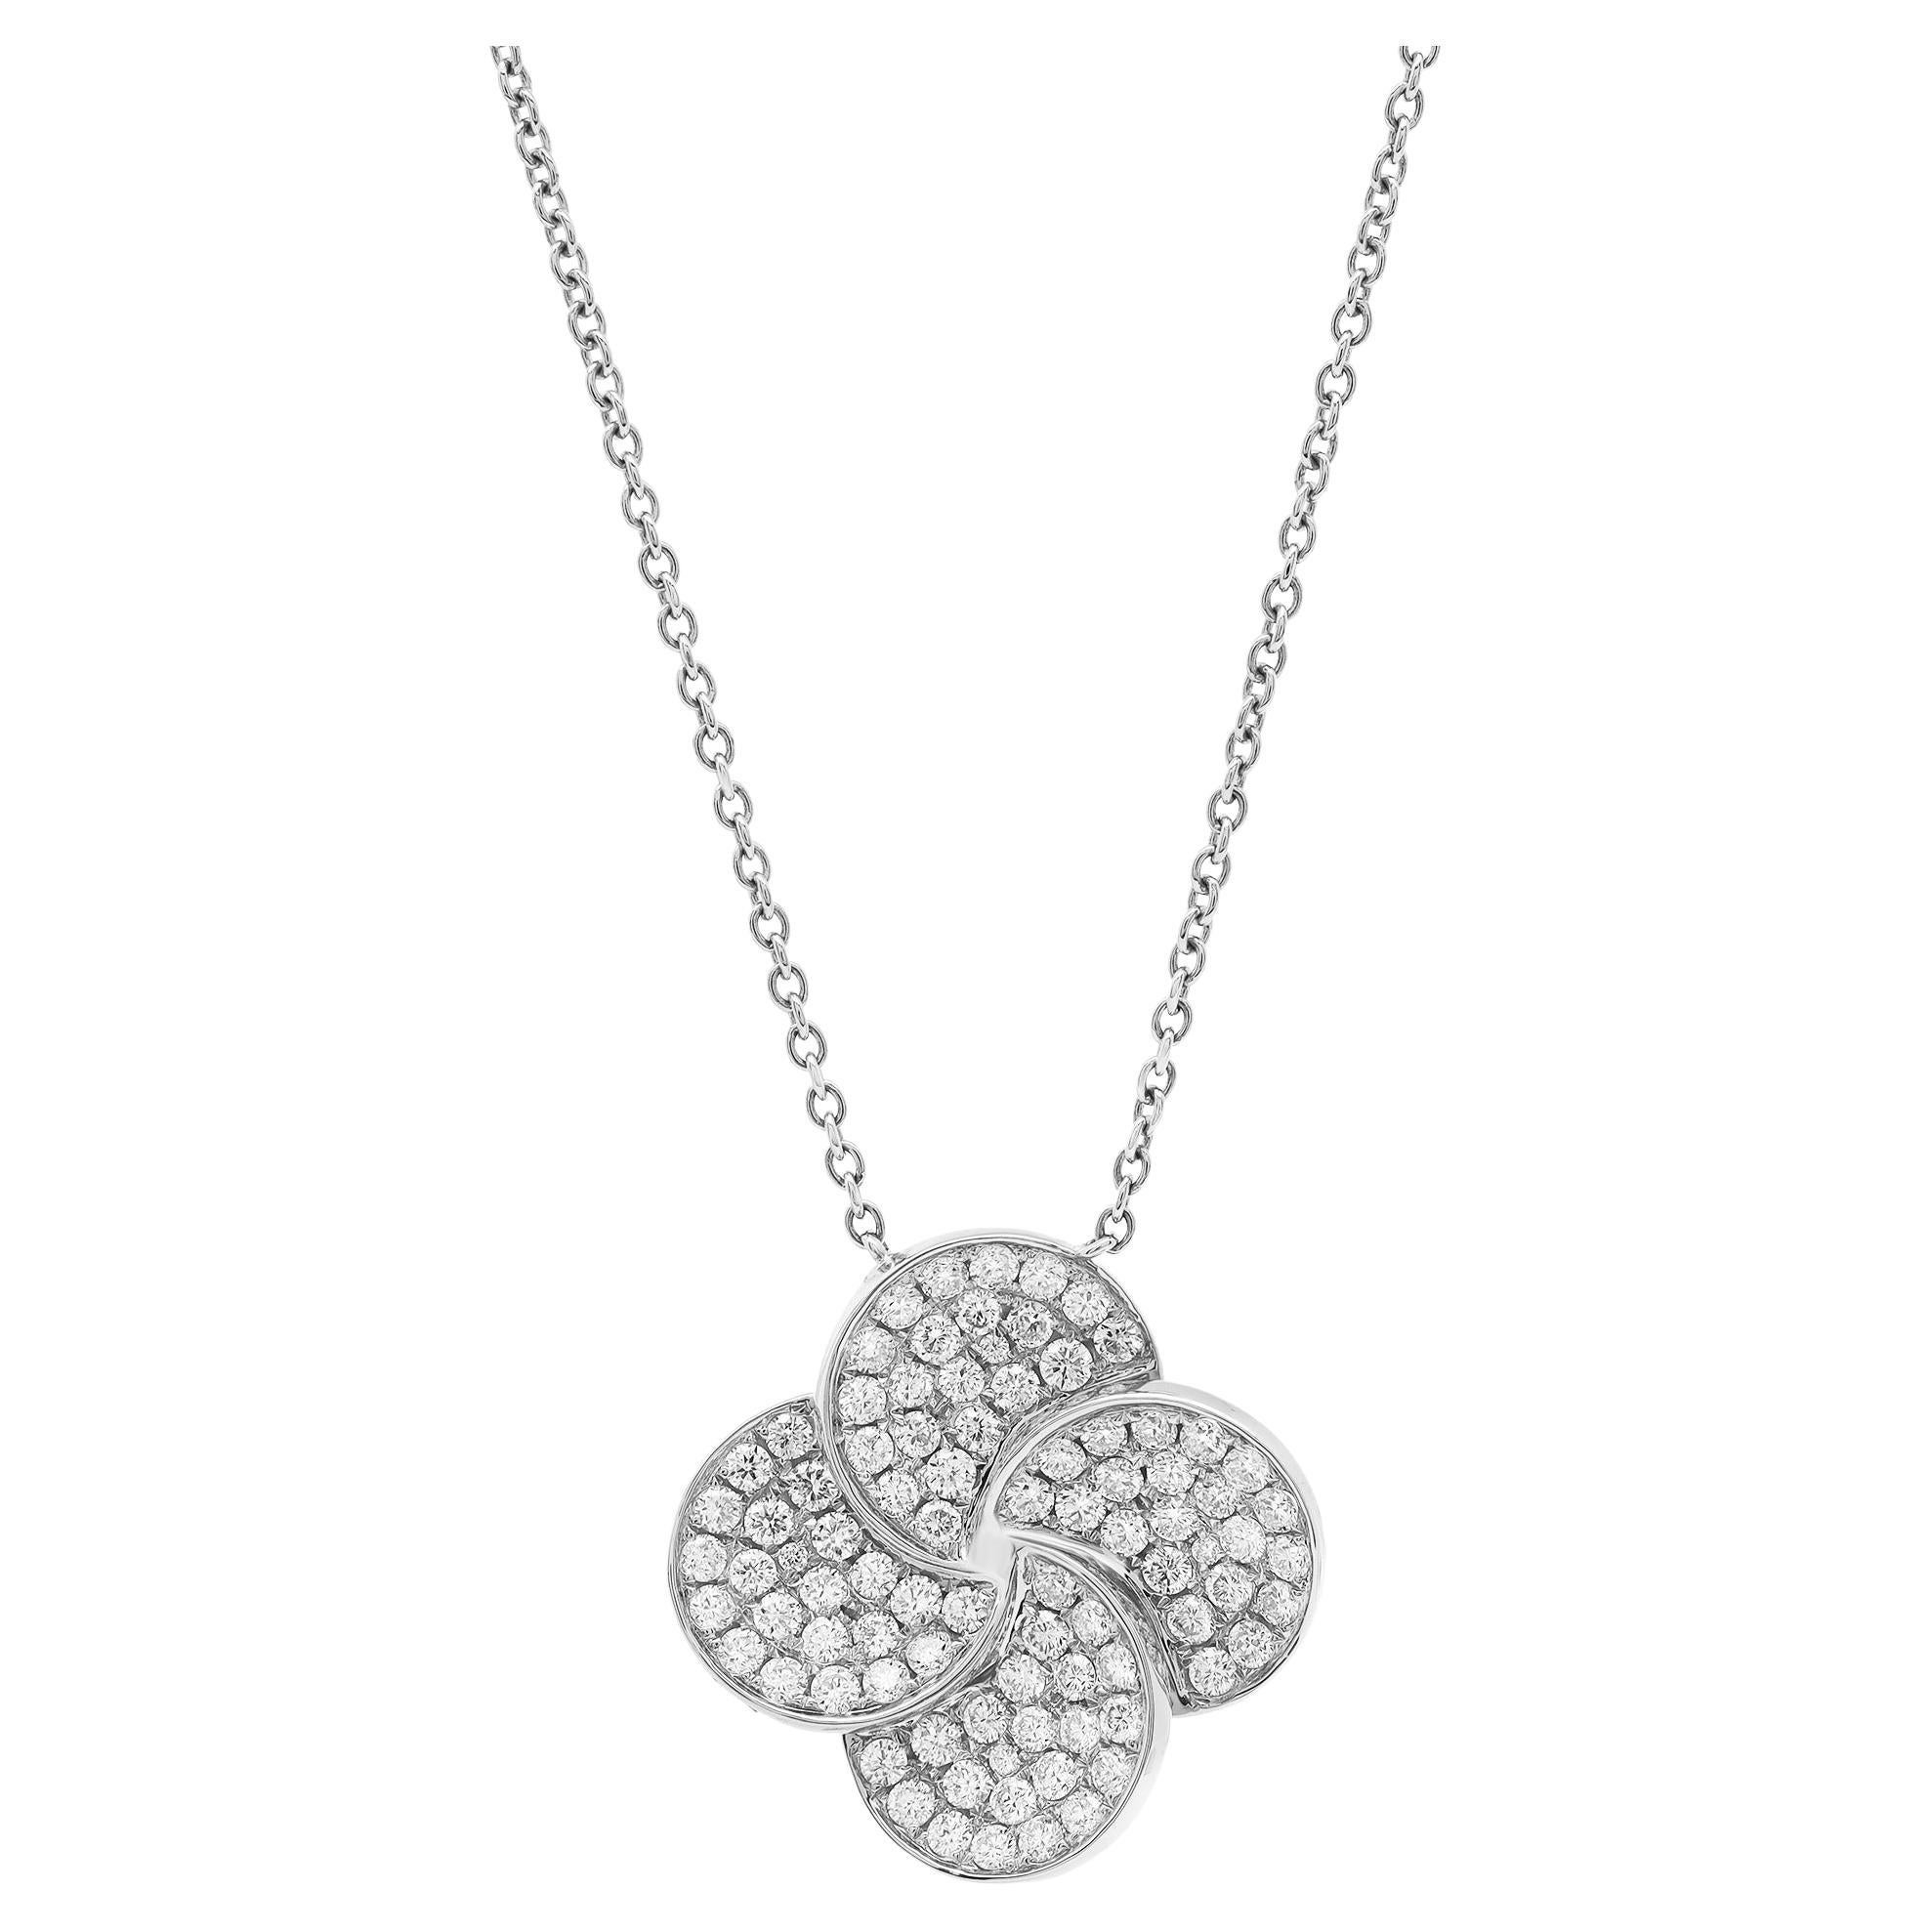 1.76cttw Pave Set Round Cut Diamond Flower Pendant Necklace 18K White Gold For Sale